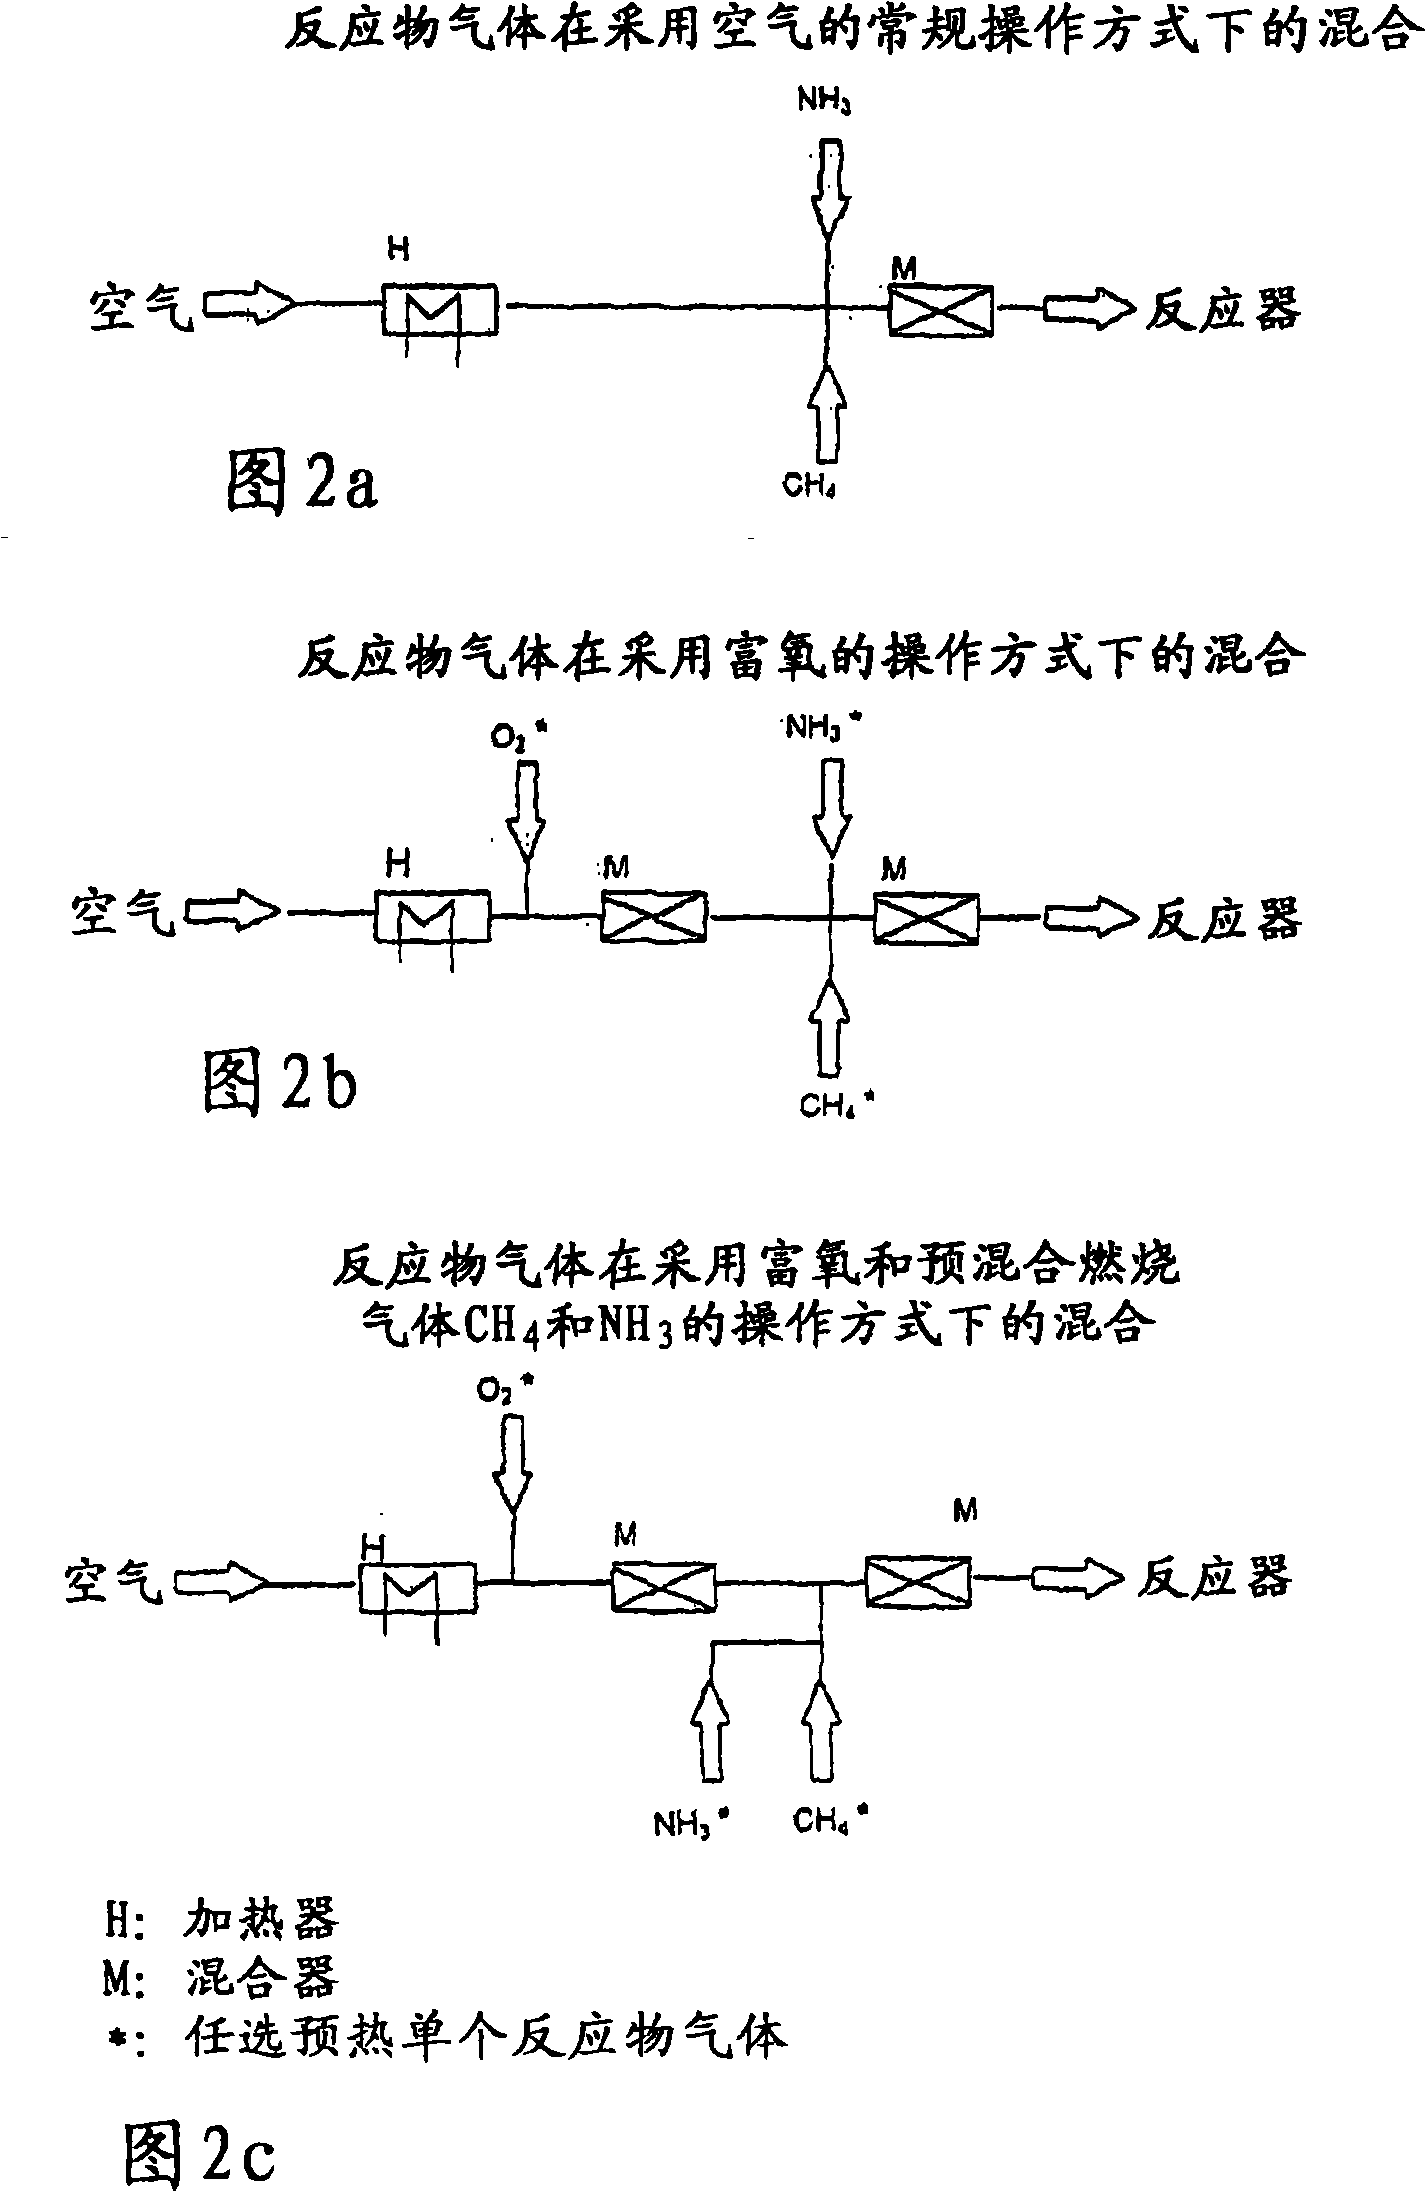 Method for producing hydrocyanic acid (HCN)